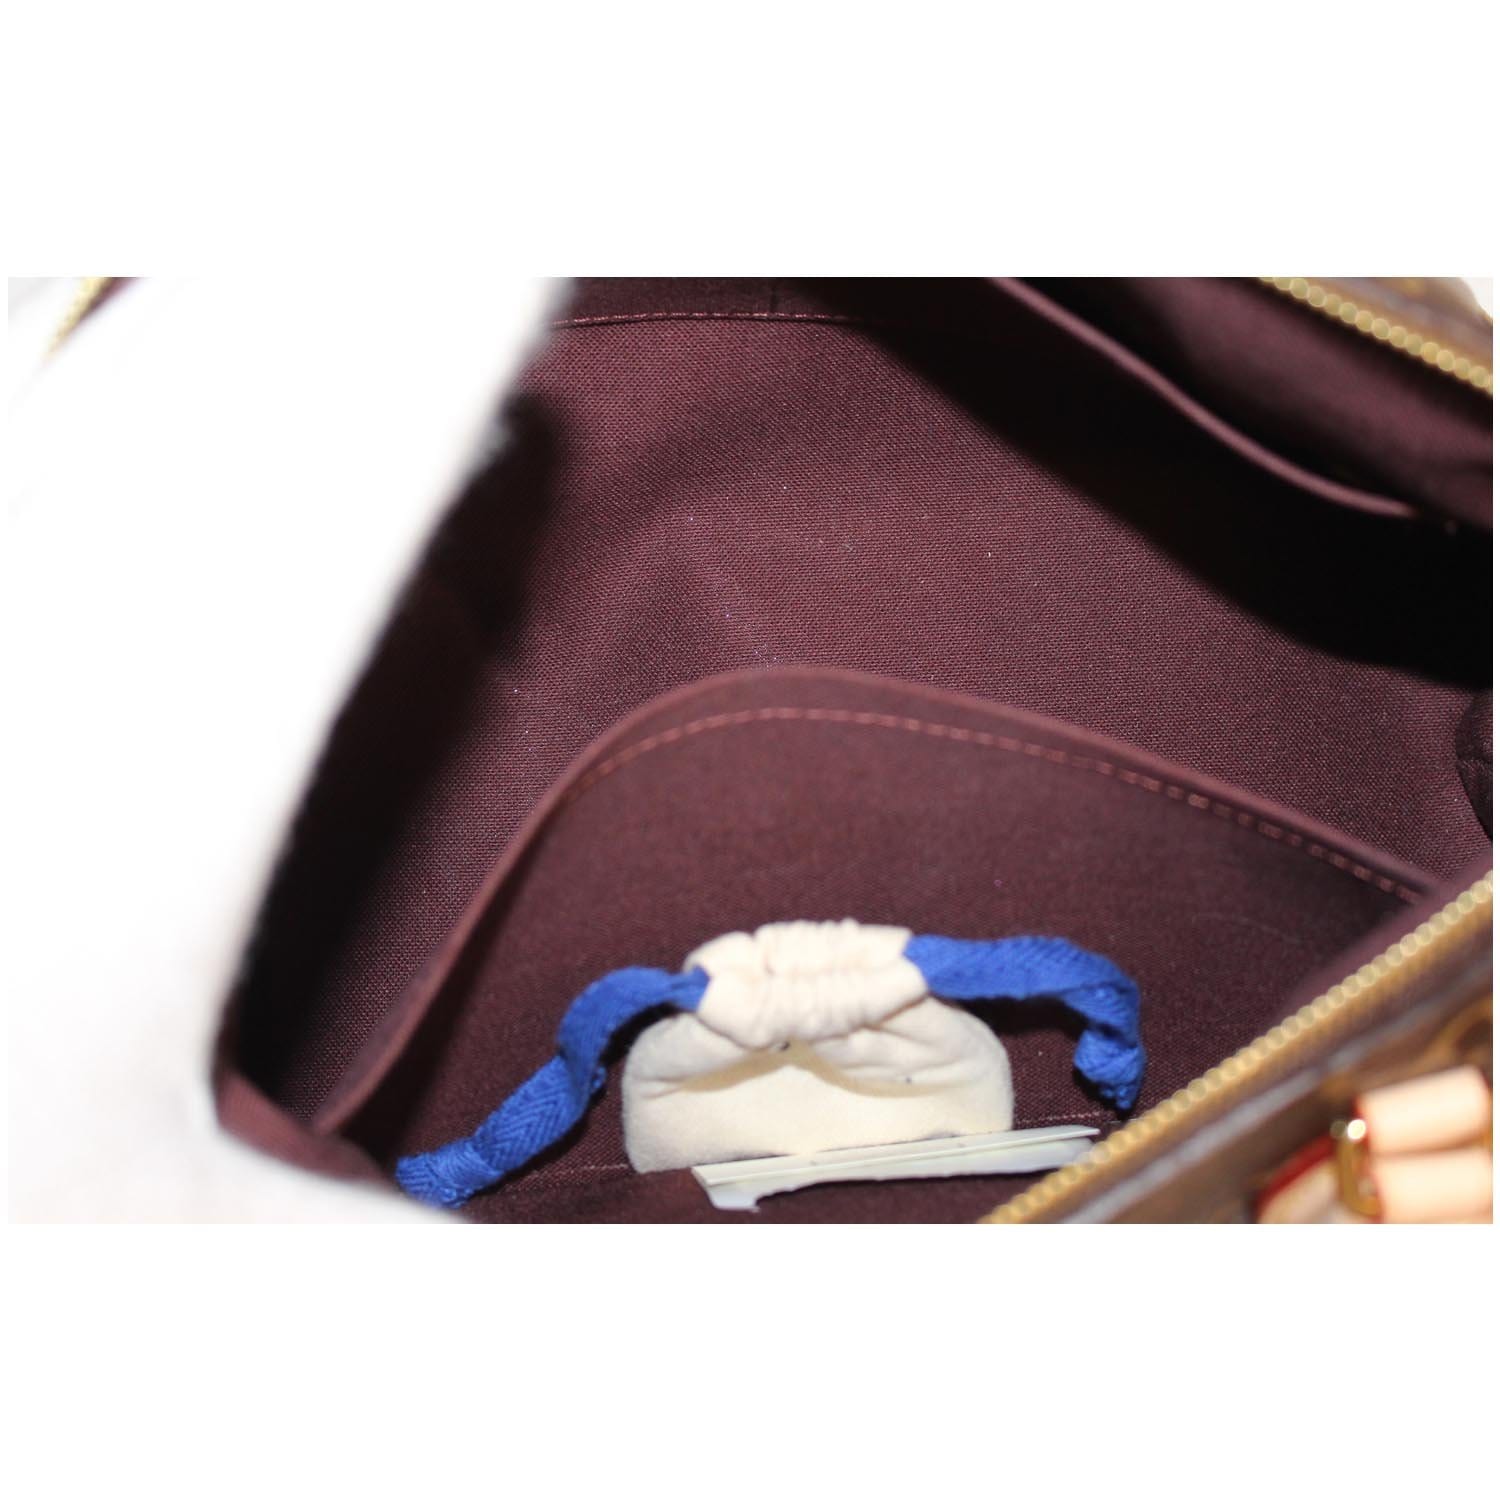 Now this bag!!! The Louis Vuitton Rivoli is simply beautiful. #designe